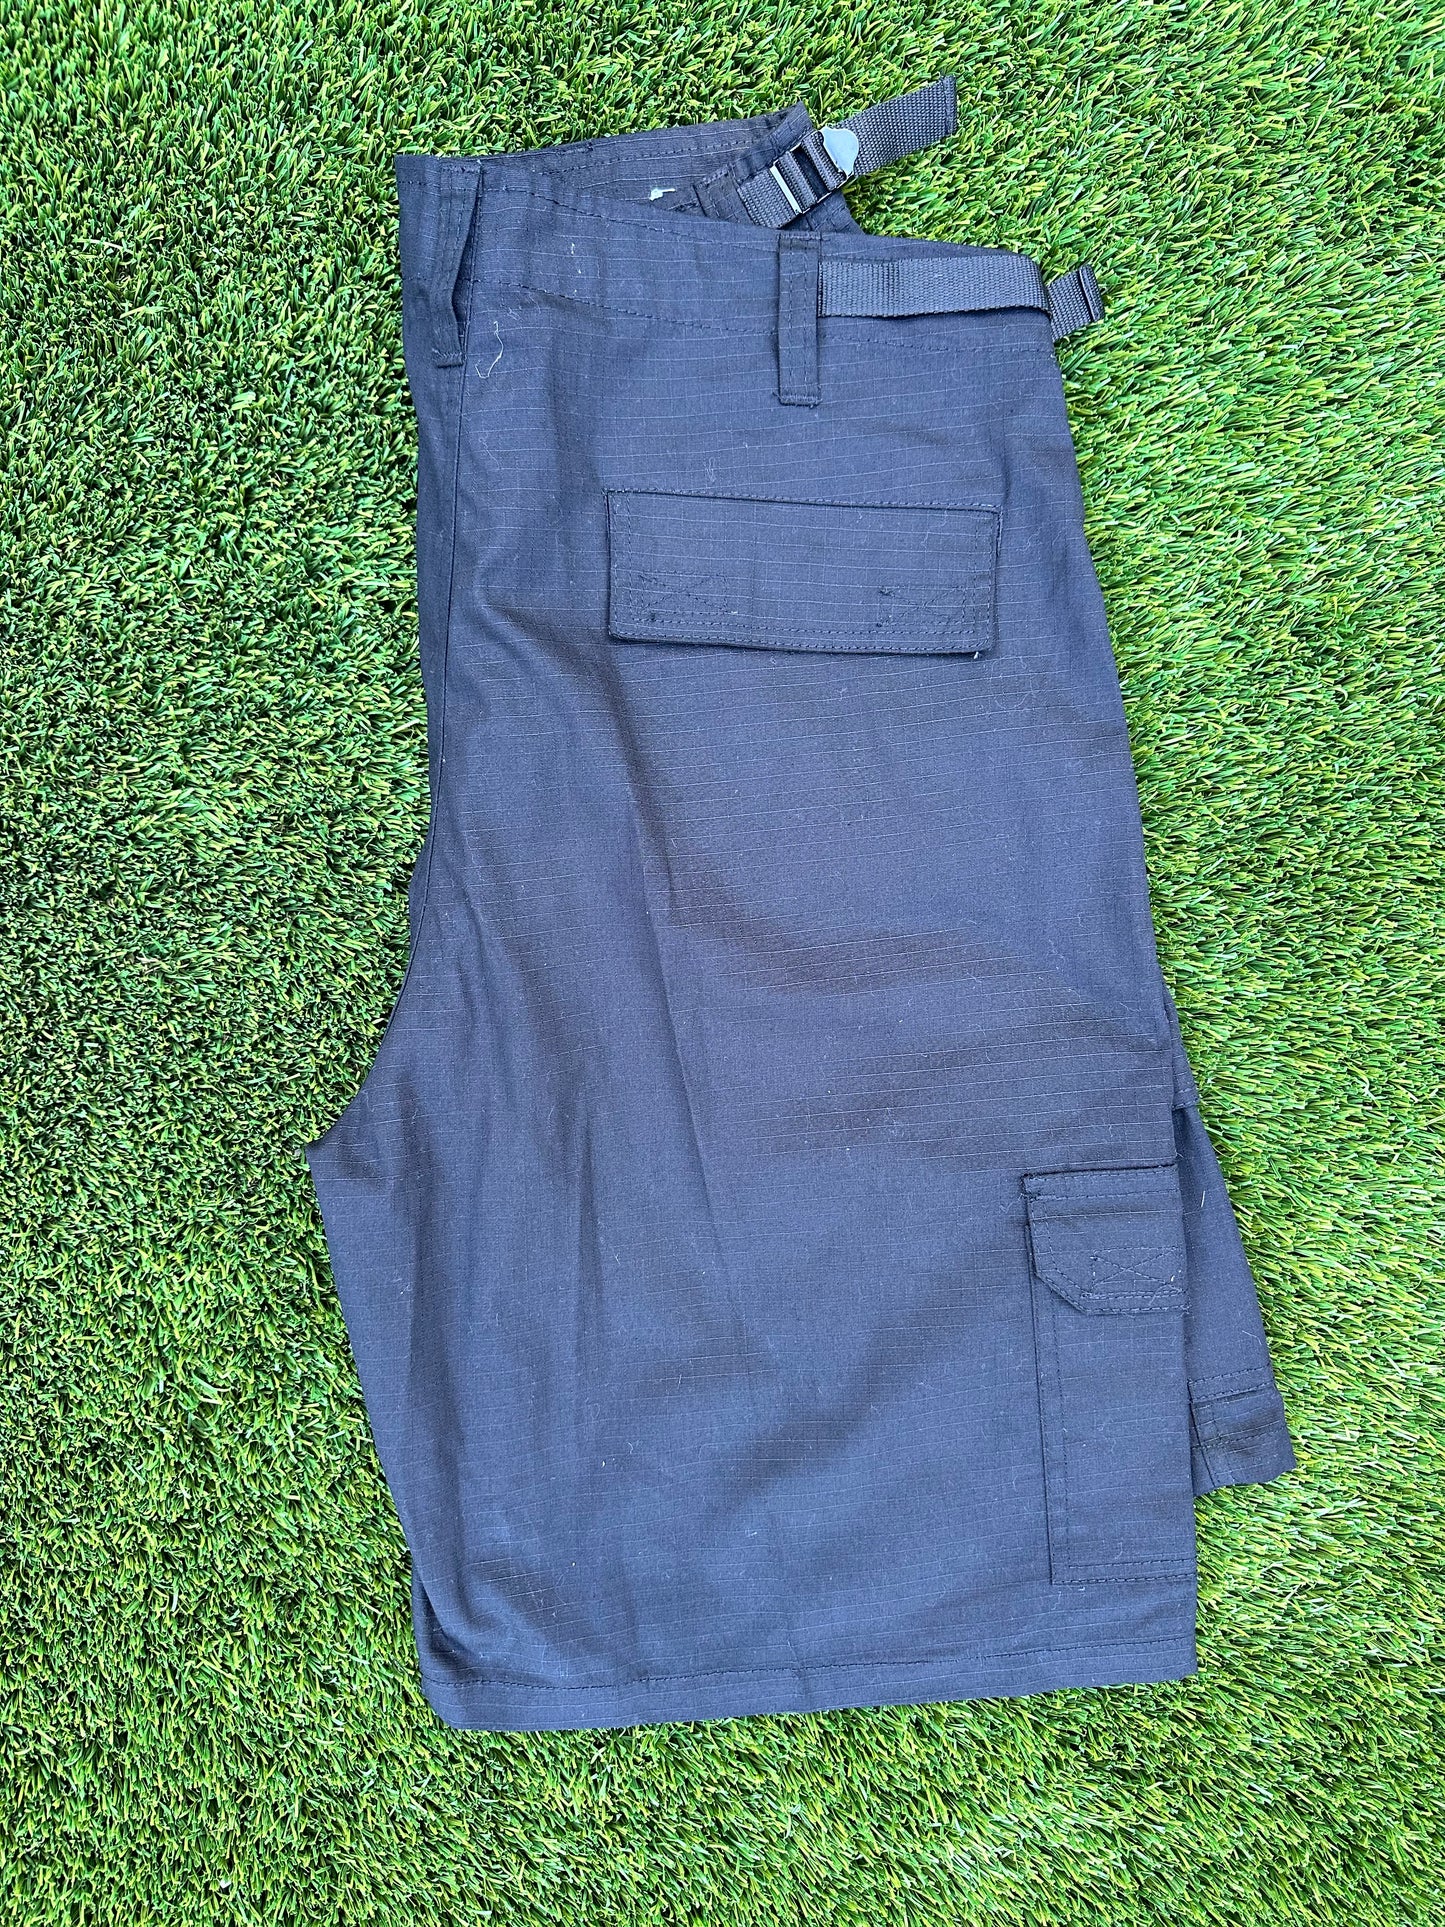 BONES: Colin Fisher's Blue Cargo Shorts (M)